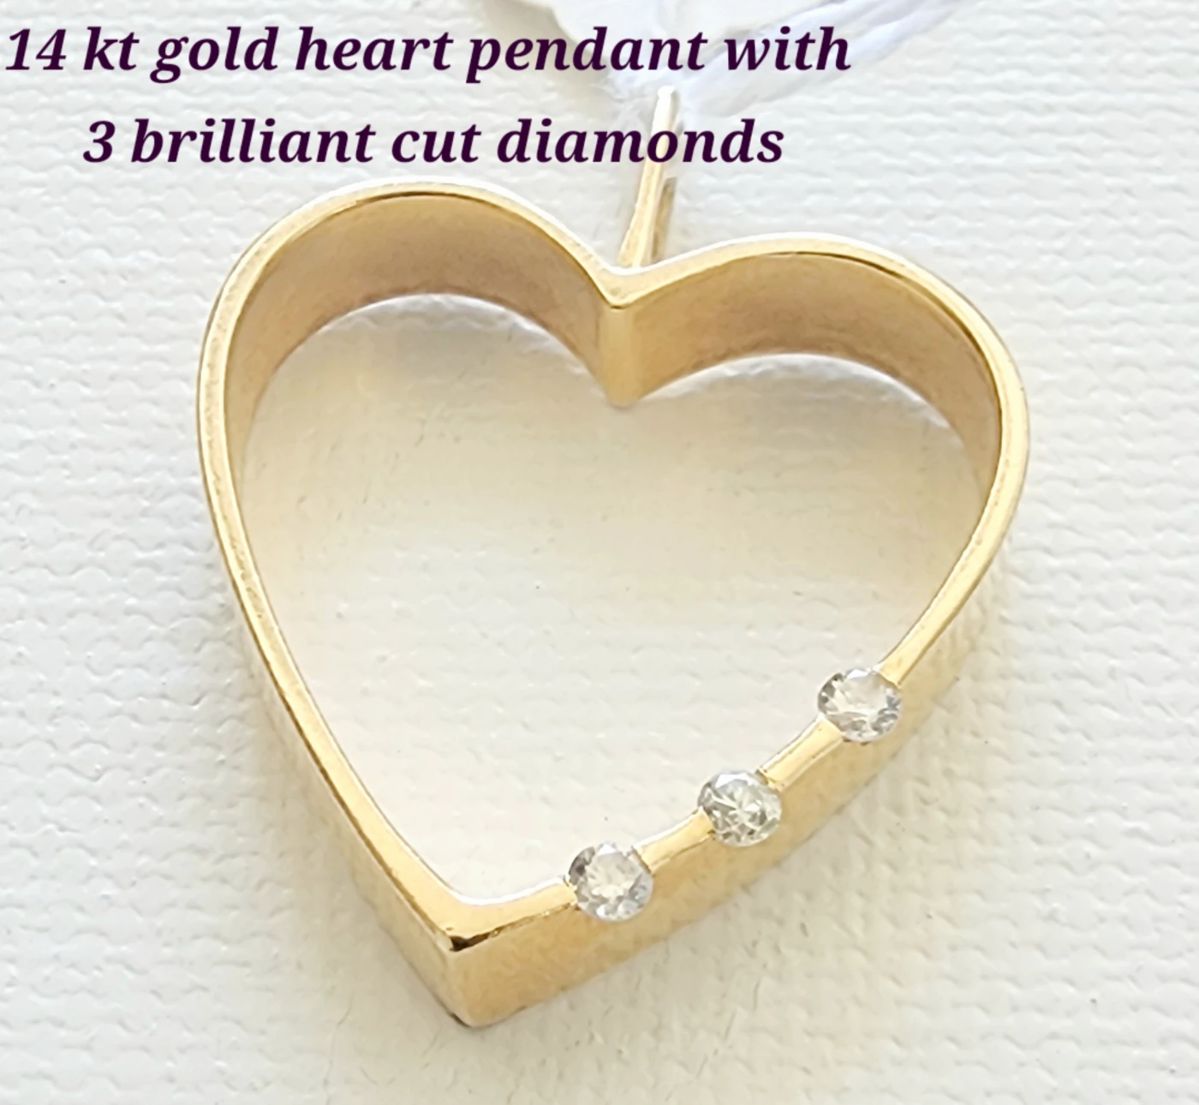 14 kt gold heart pendant with 3 brilliant cut diamonds.